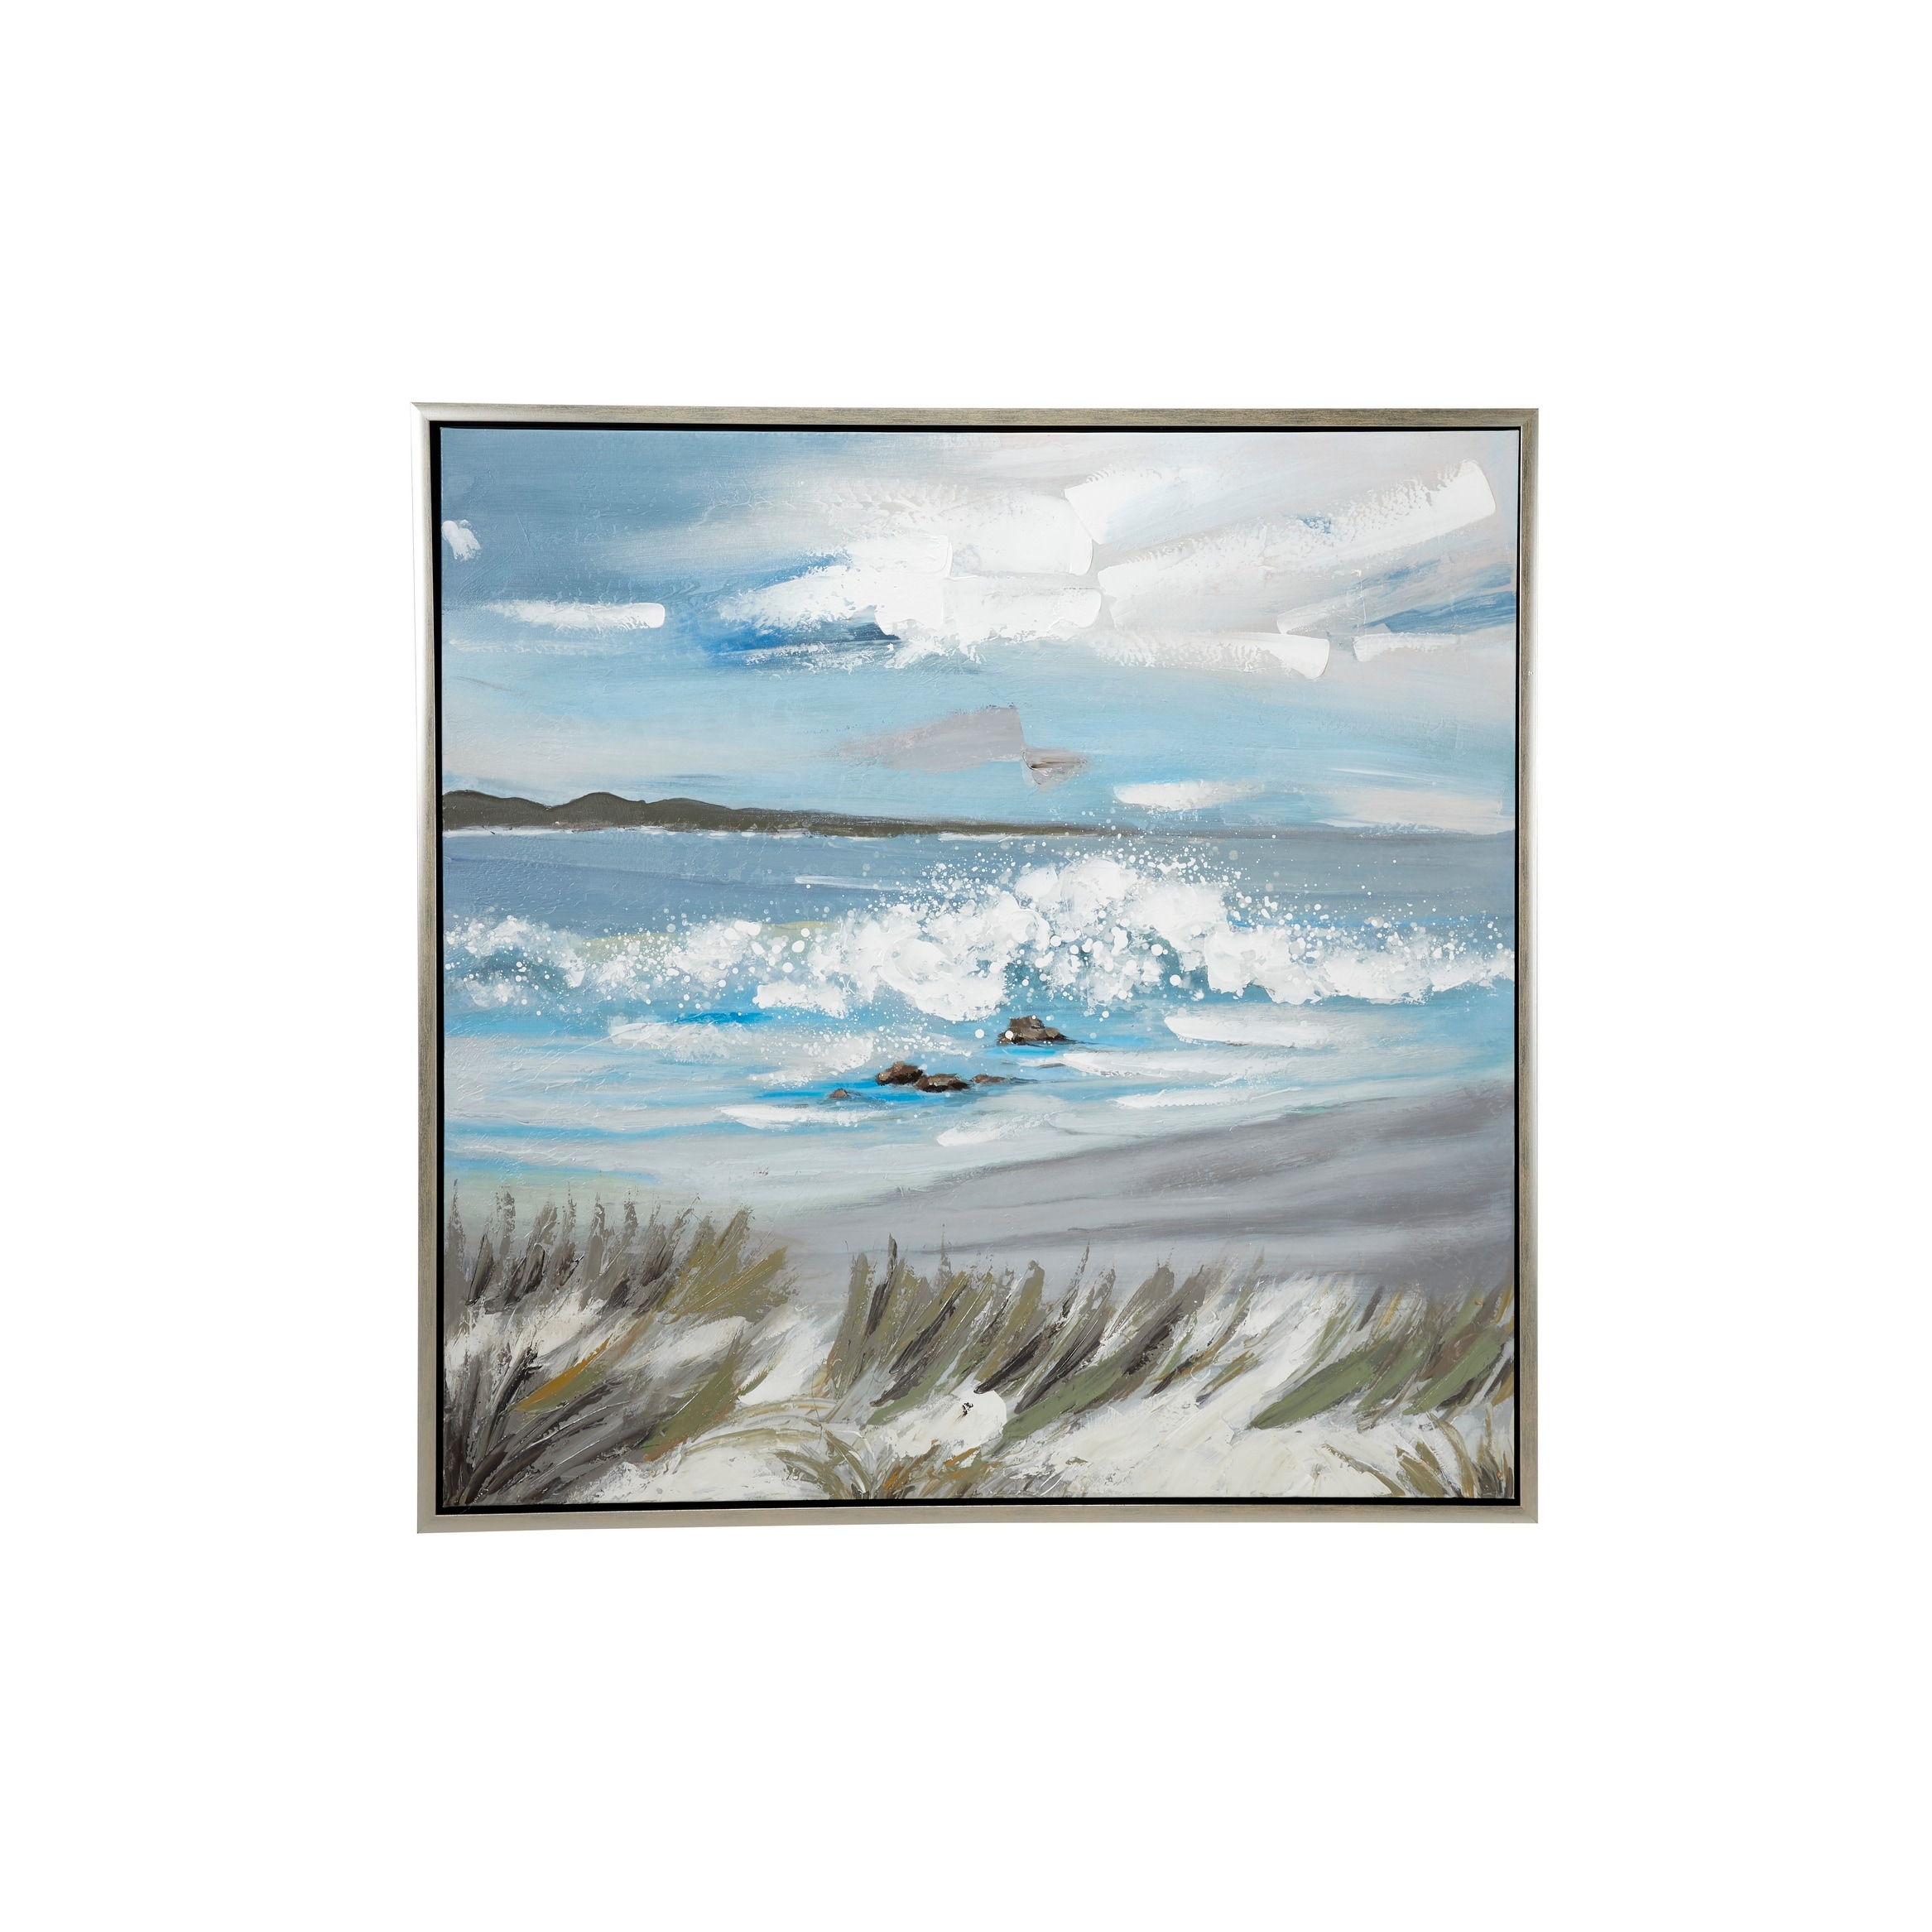 Rock Sea 10 x 10 in \u2013 One of a kind handmade acrylic on canvas Art. Shoreline Small original painting Coastal Estuary Landscape